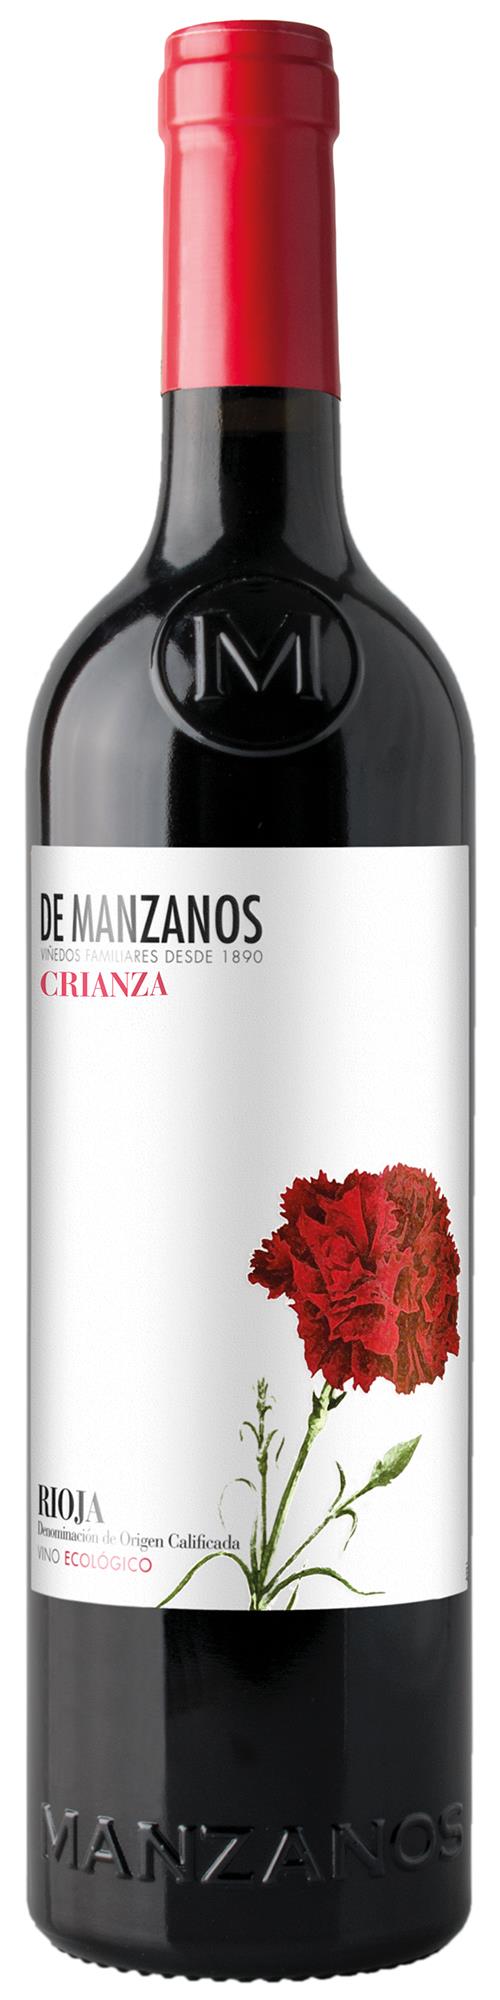 DE MANZANOS CRIANZA ØKO Manzanos, Rioja 2016 75cl 14%